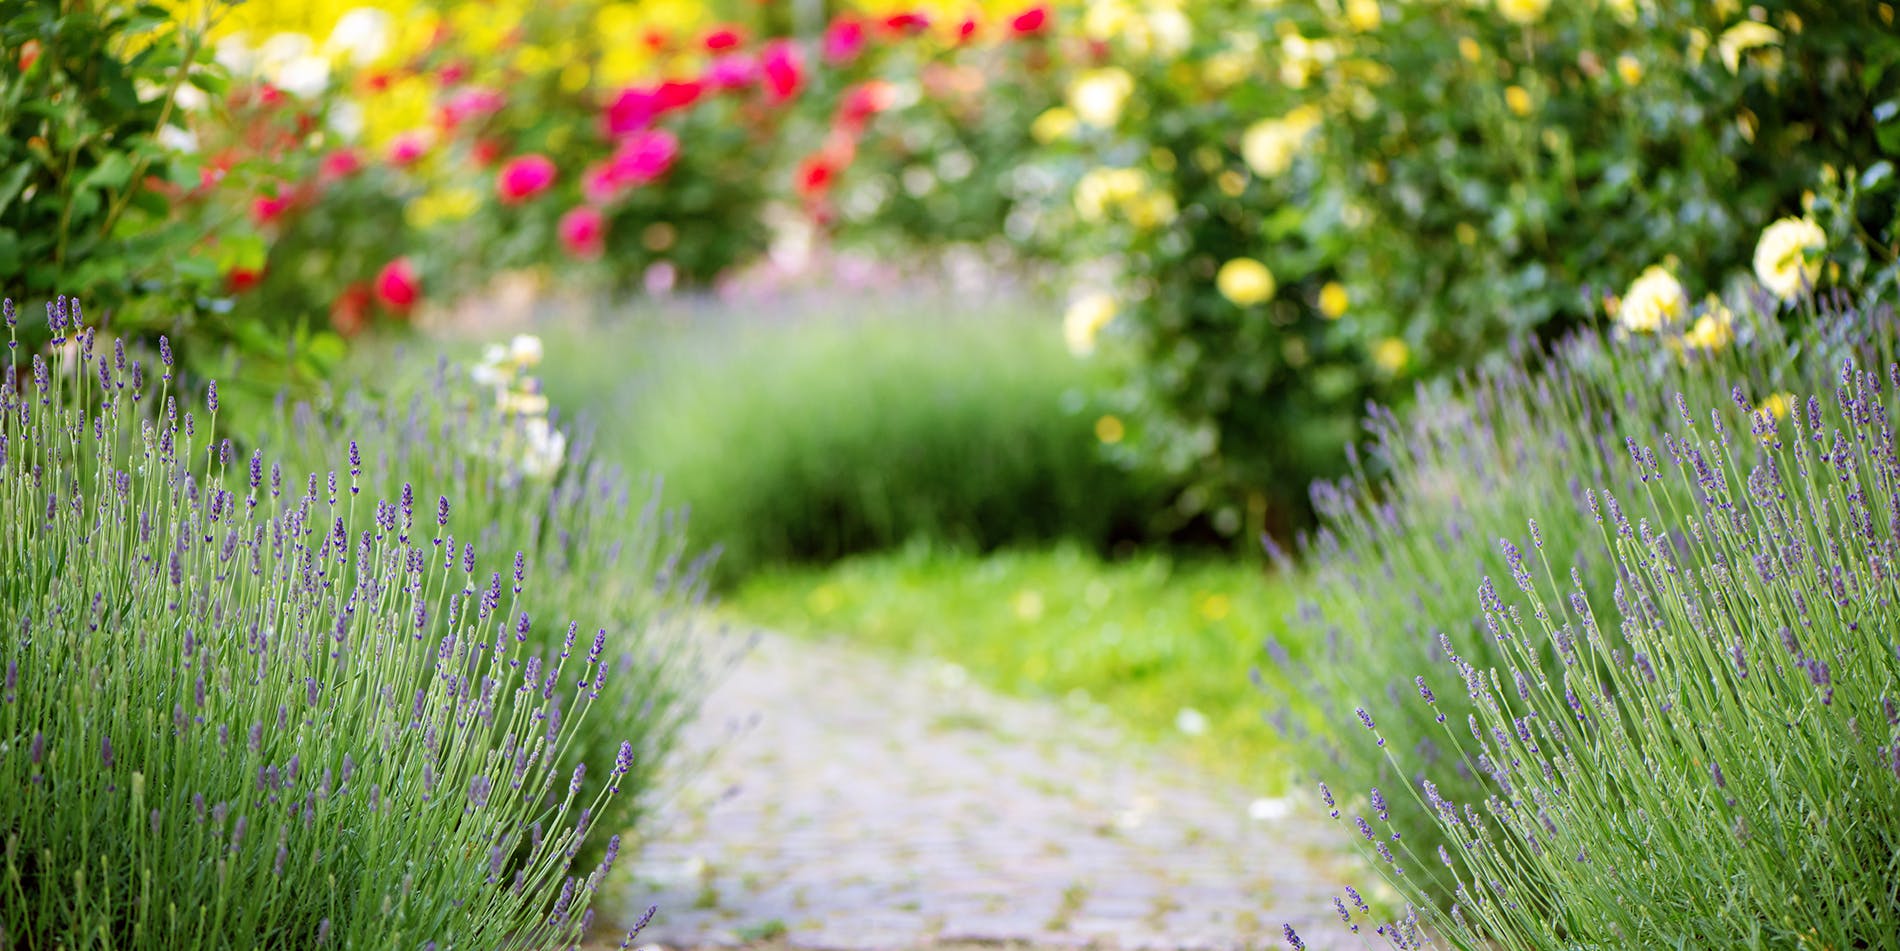 A garden path with lavender